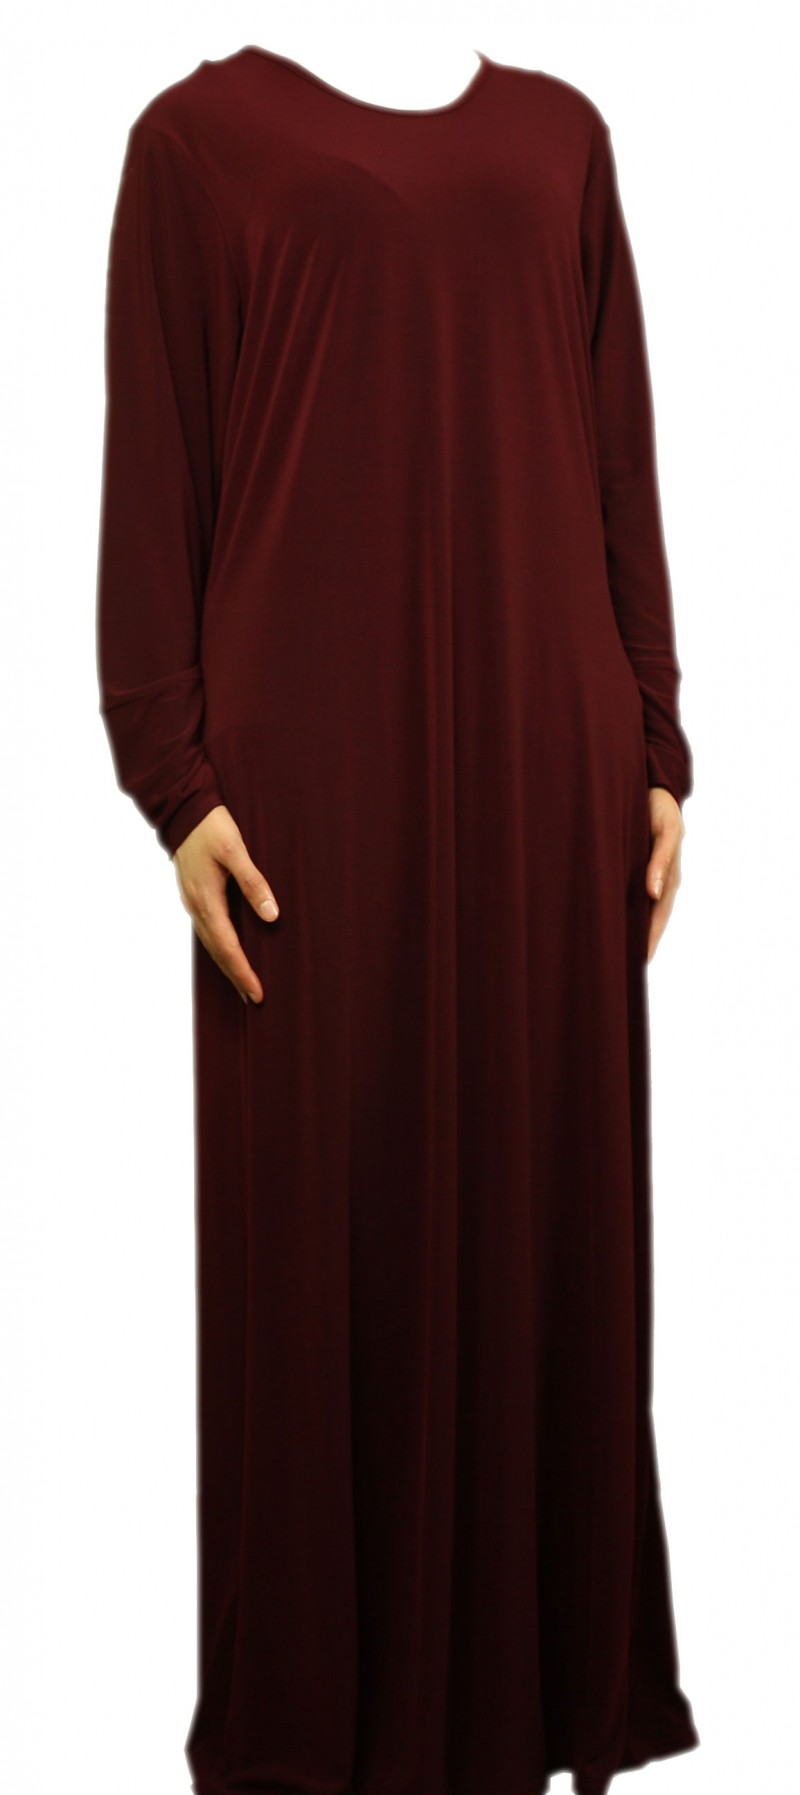 Plain Wine Red Abaya - Size 54